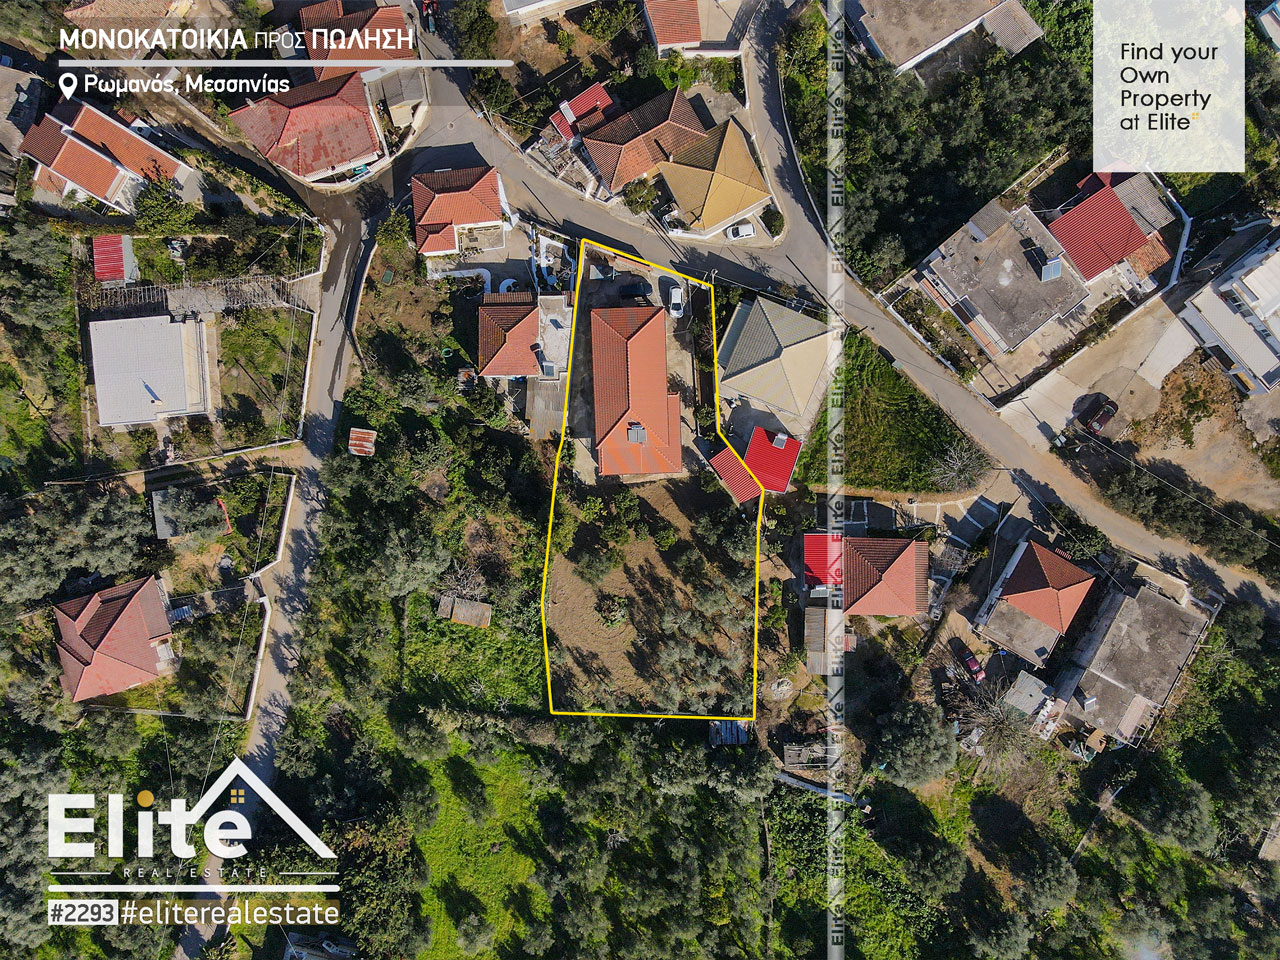 Verkaufen, freistehendes Haus in Romanos Pylos Nestoros #2293 | ELITE REAL ESTATE